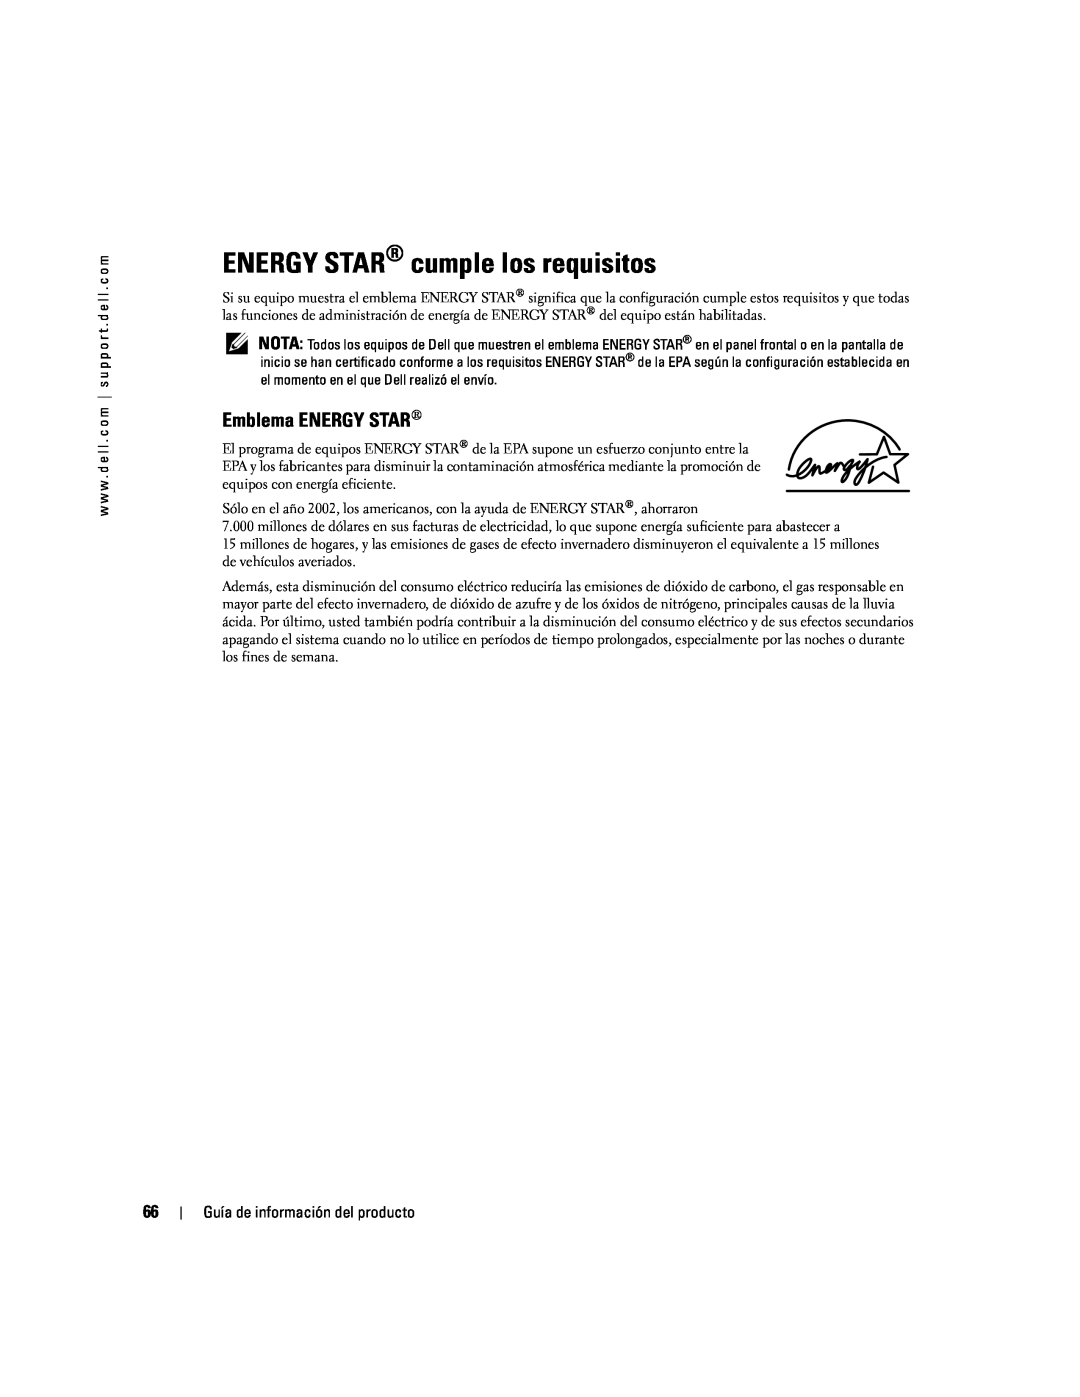 Dell W4200 manual ENERGY STAR cumple los requisitos, Emblema ENERGY STAR 